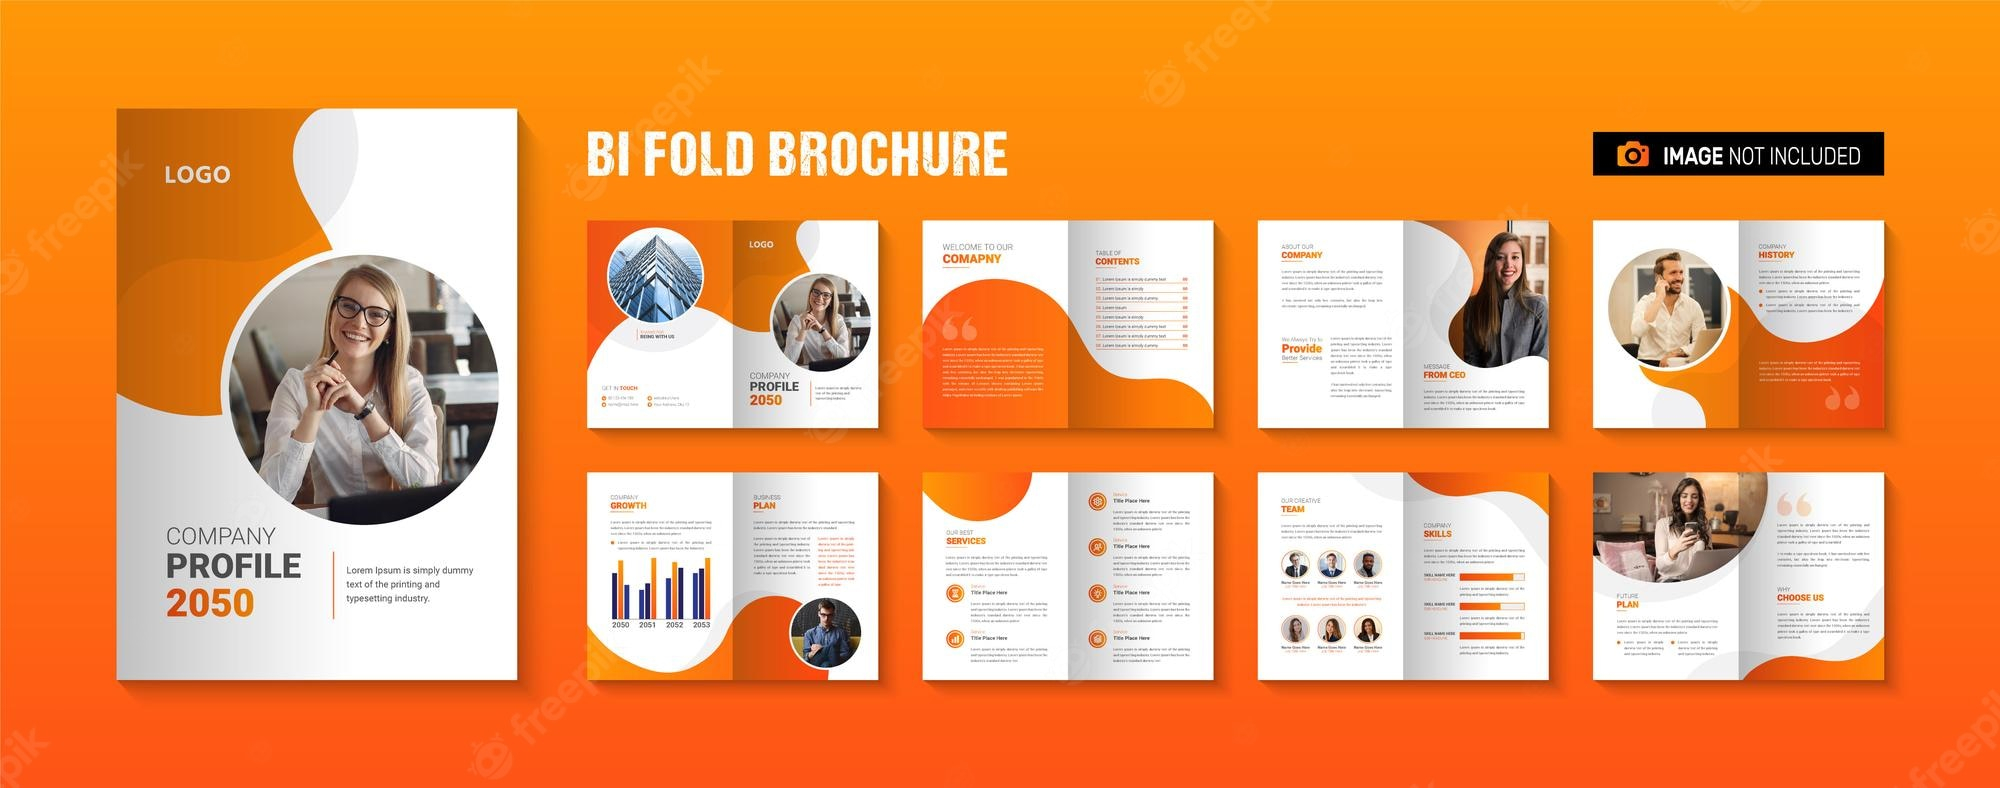 Half fold brochure Vectors & Illustrations for Free Download  Freepik Within Half Page Brochure Template